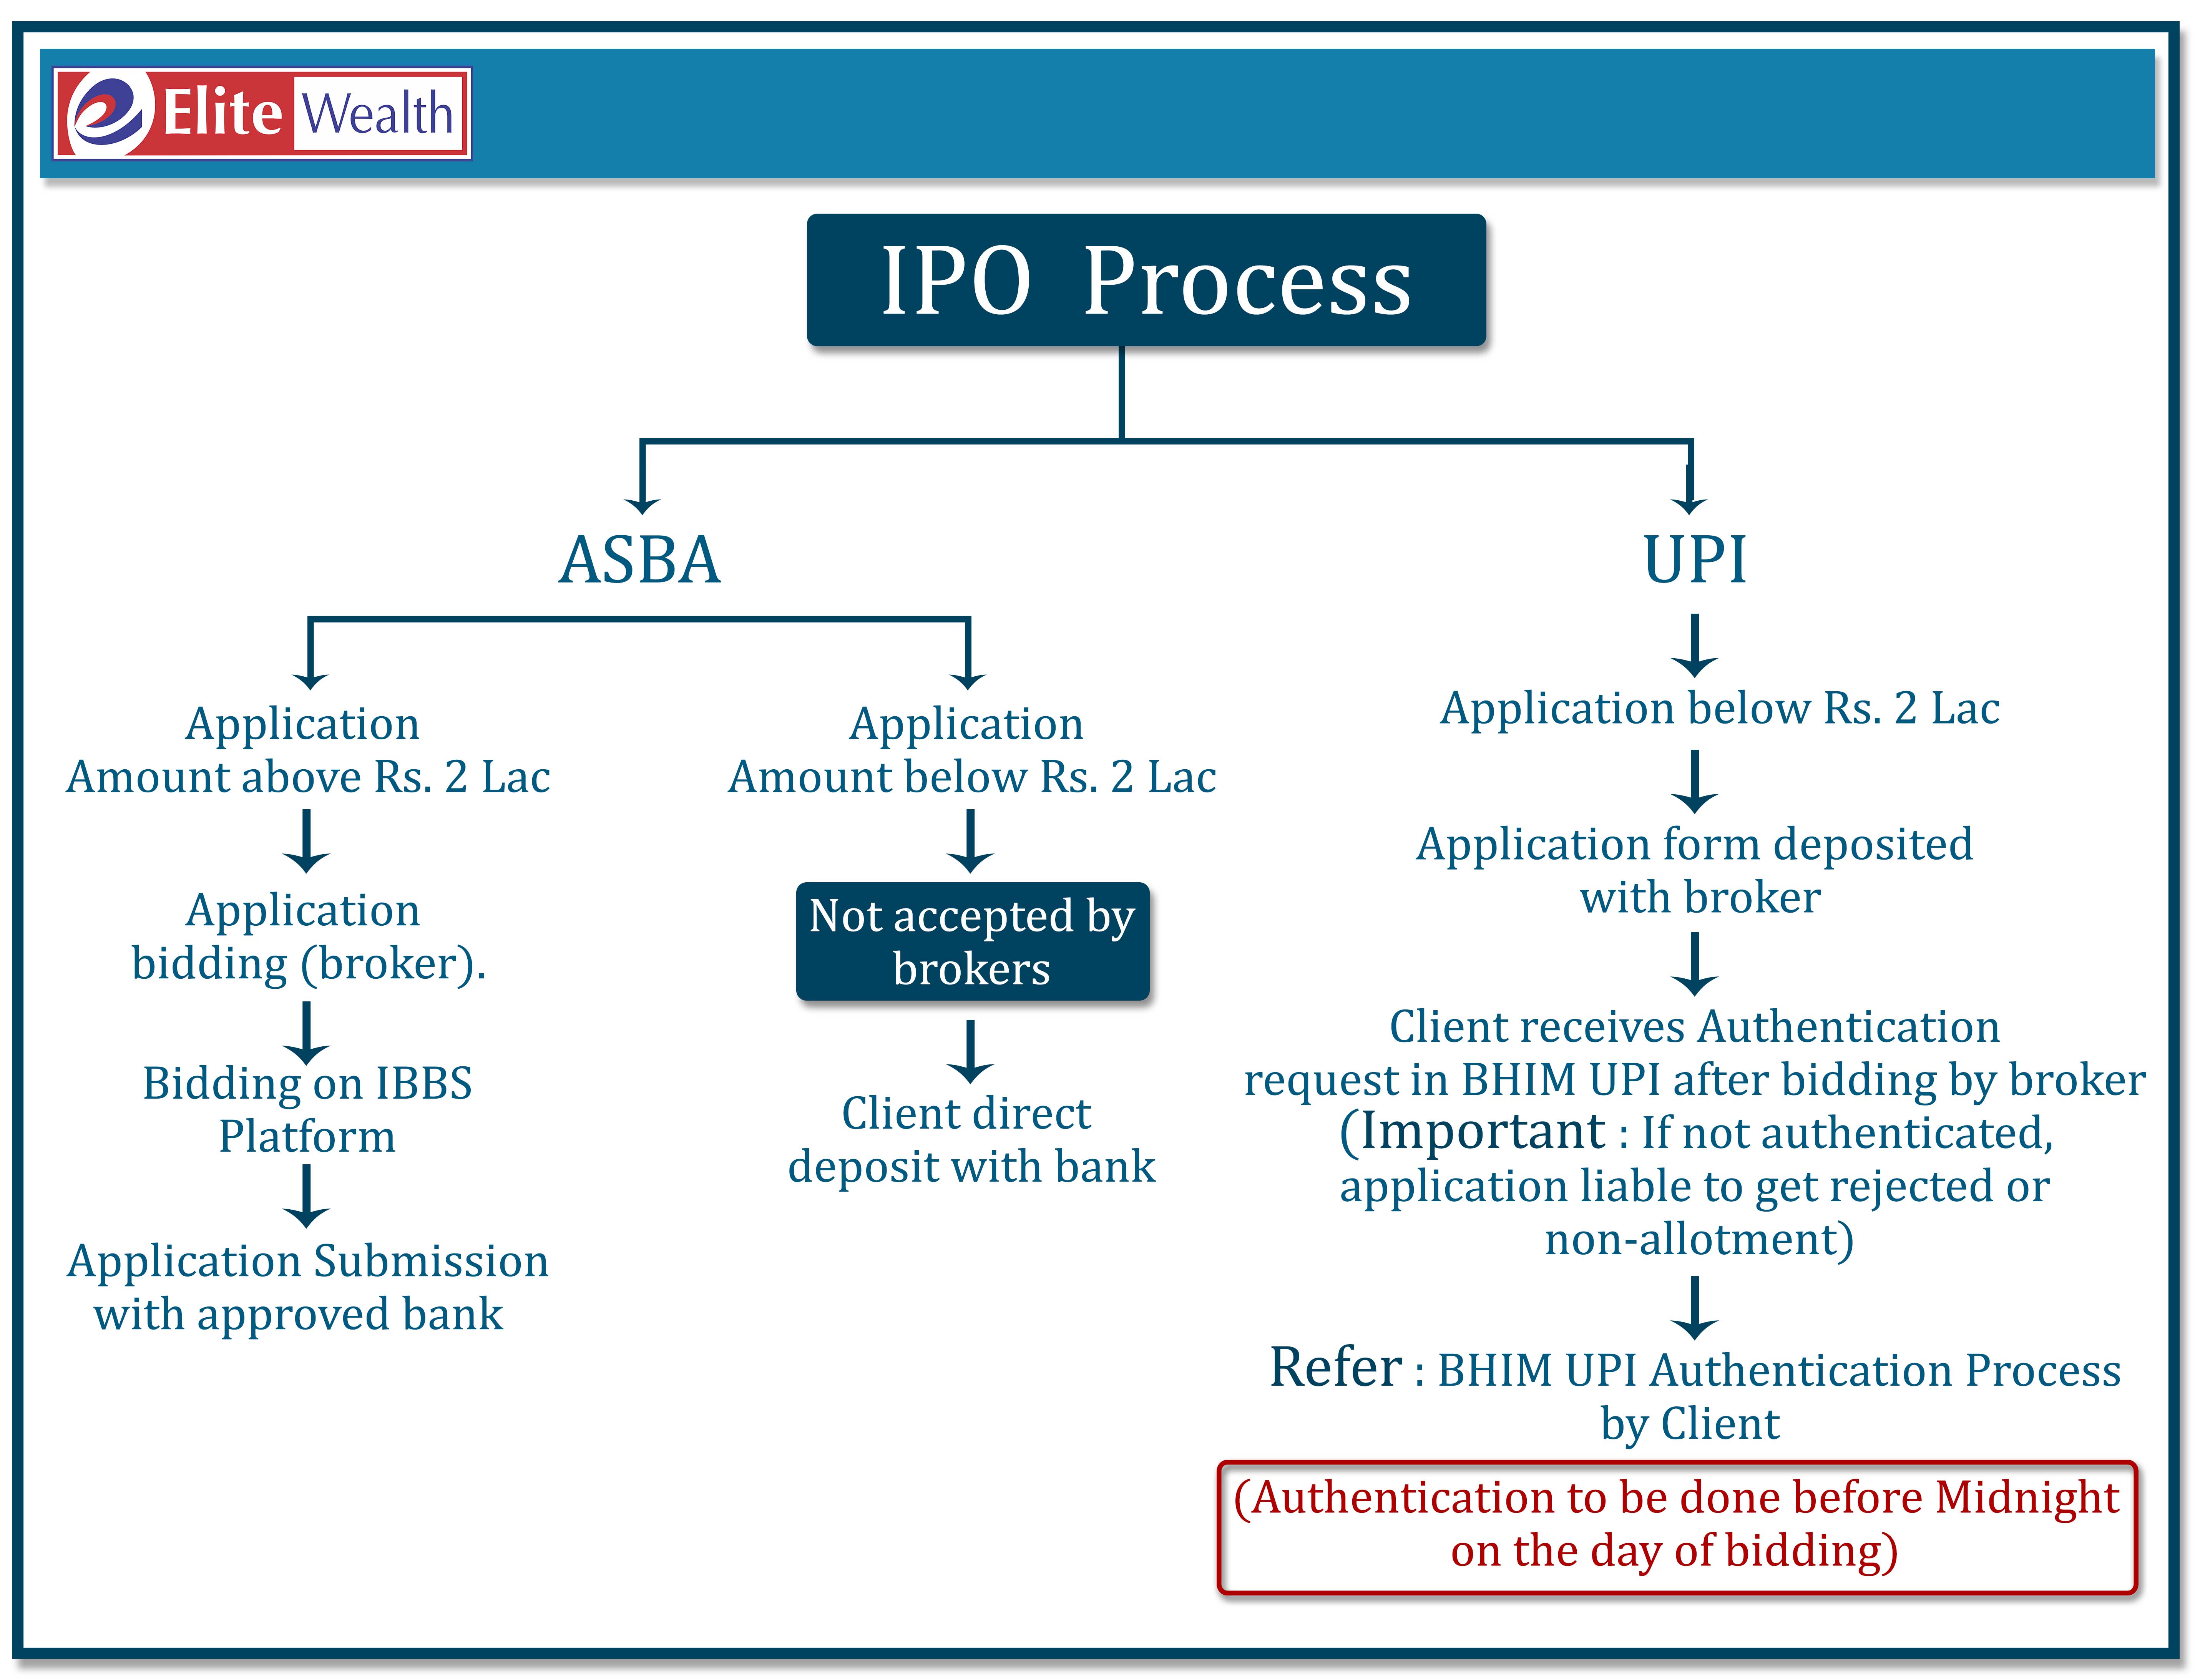 IPO Process Through UPI Elite Wealth Business Associates